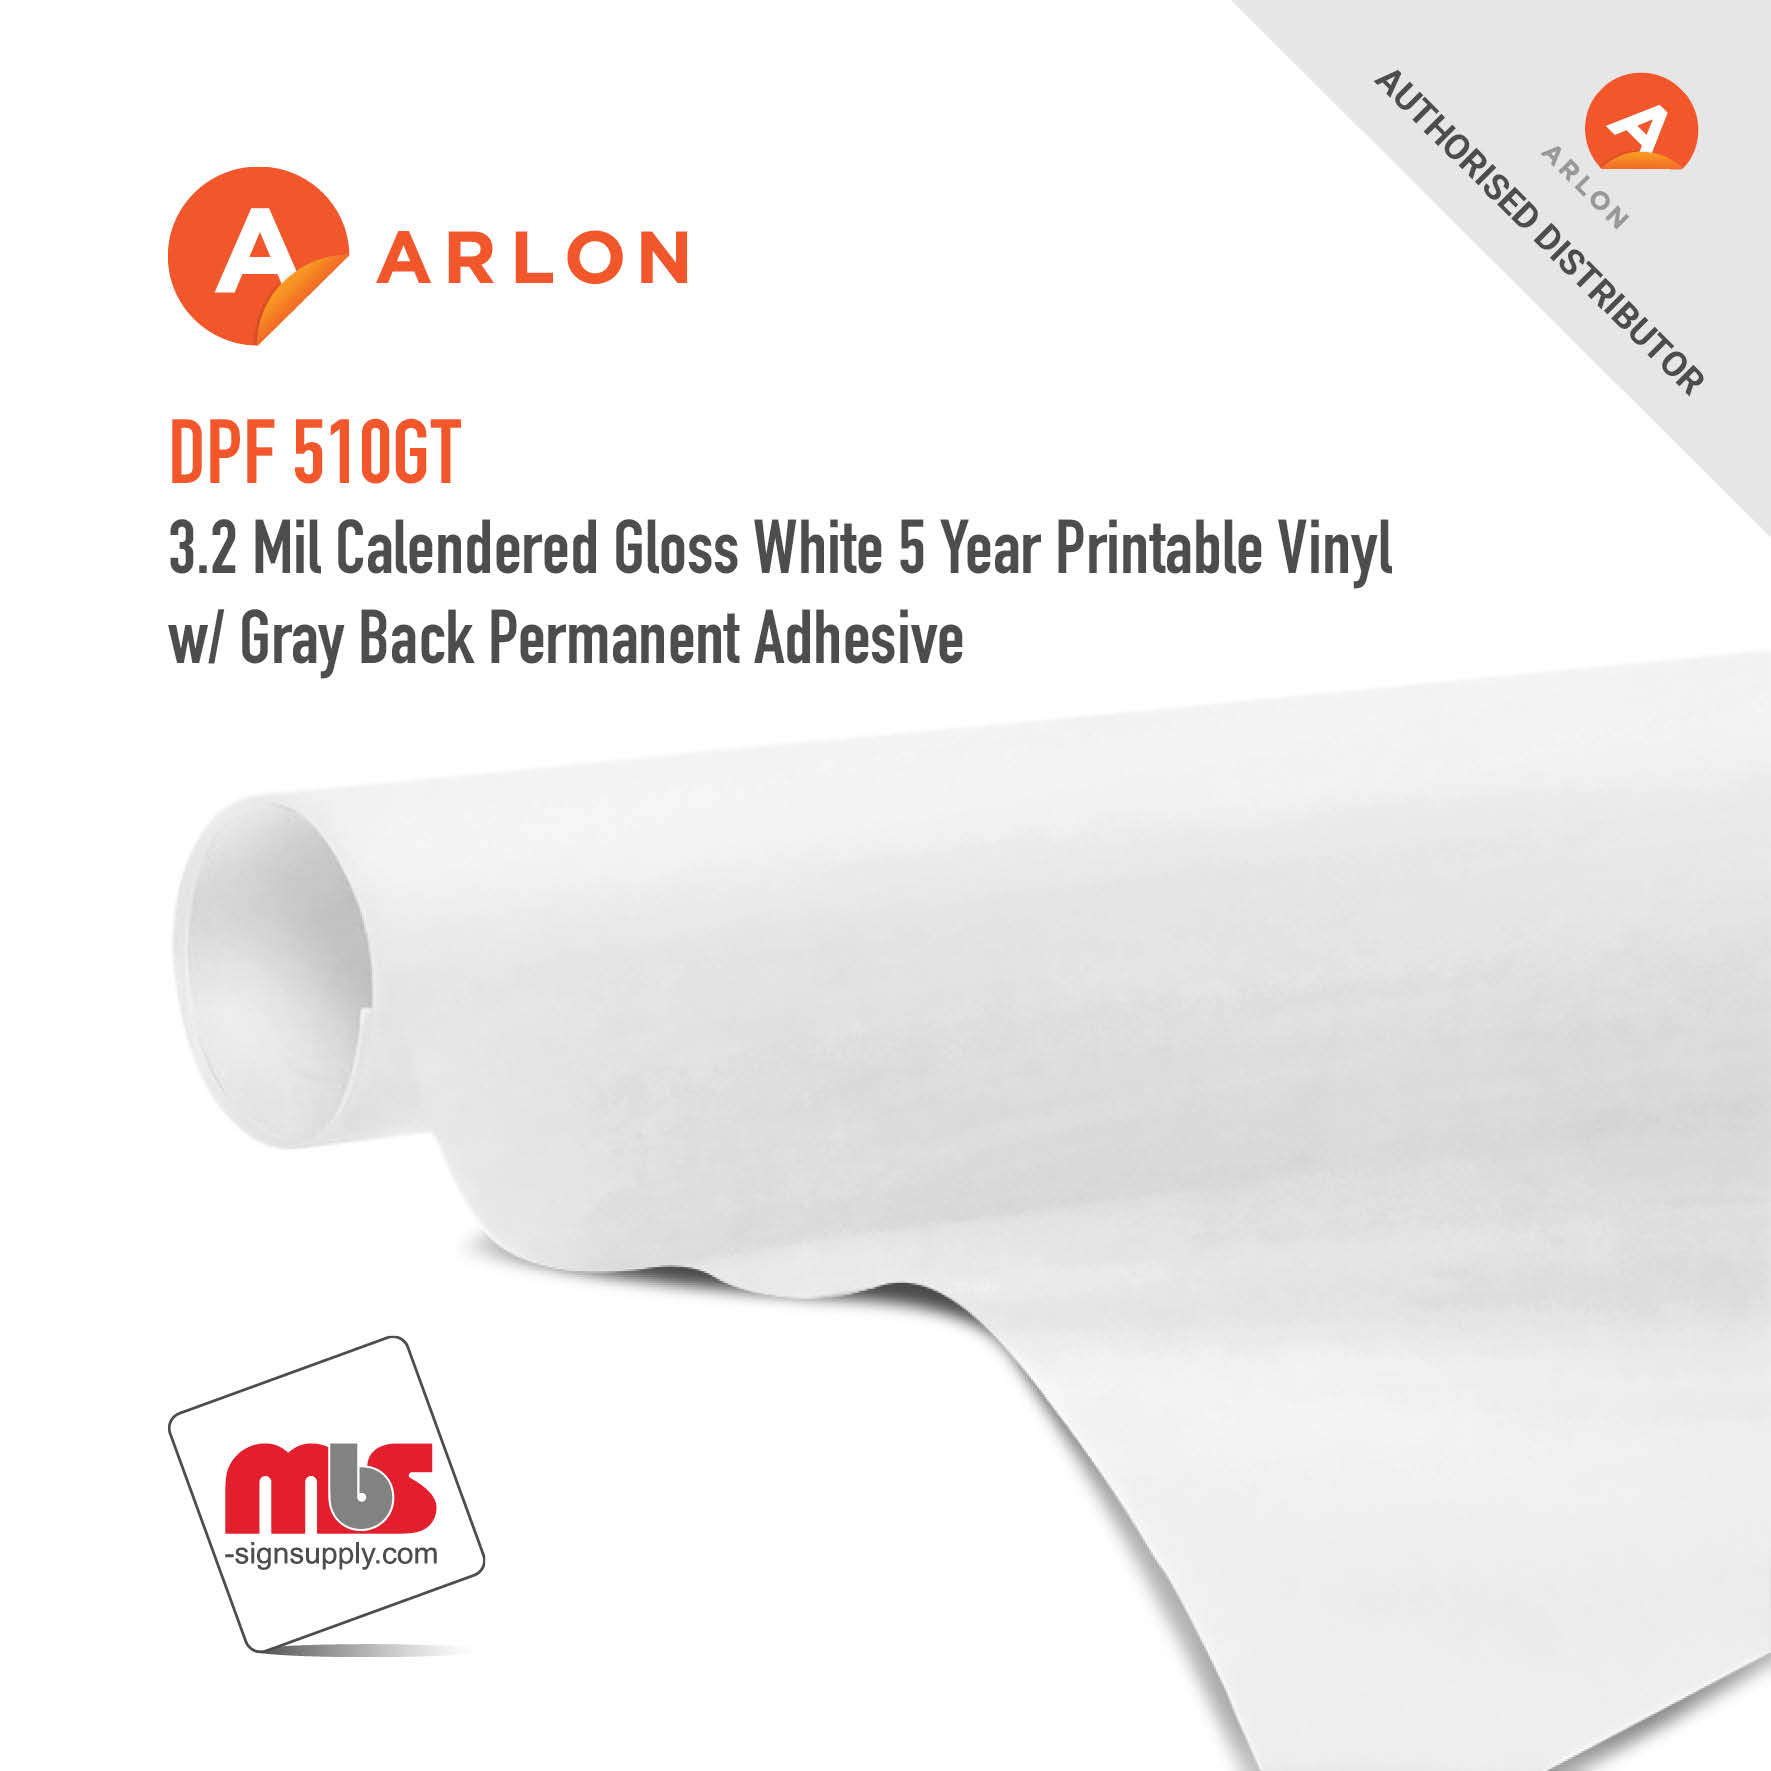 30'' x 50 Yard Roll - Arlon DPF 510GT 3.2 Mil Calendered Gloss White 5 Year Printable Vinyl w/ Gray Back Permanent Adhesive